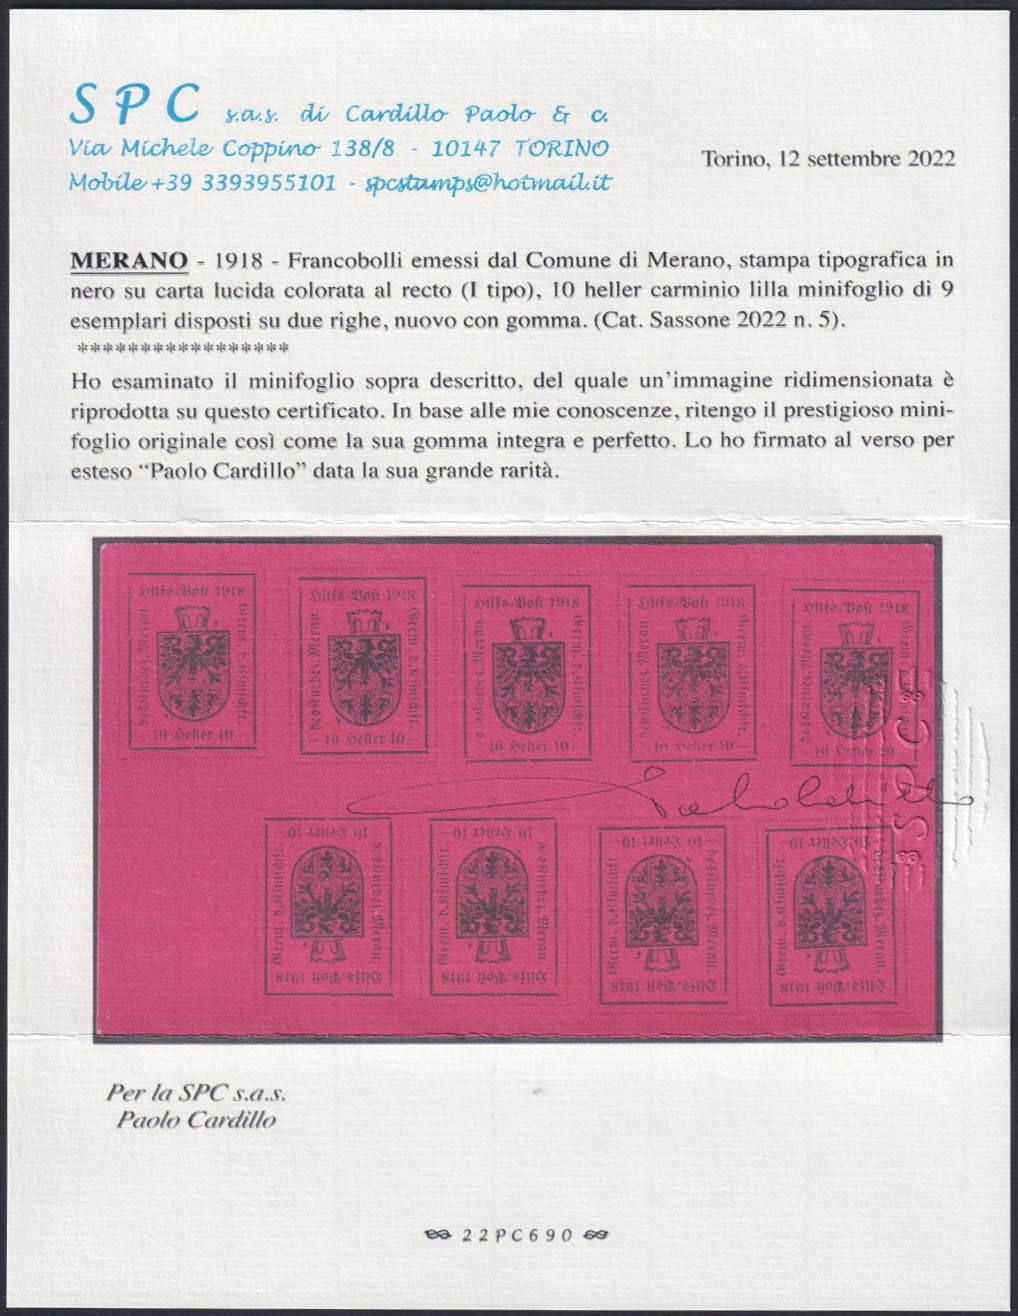 MER18 - Merano, 10 lila carmín heller, impresión tipográfica de 1er tipo, minihoja de 9 ejemplares nuevos con goma intacta, gran rareza (5).